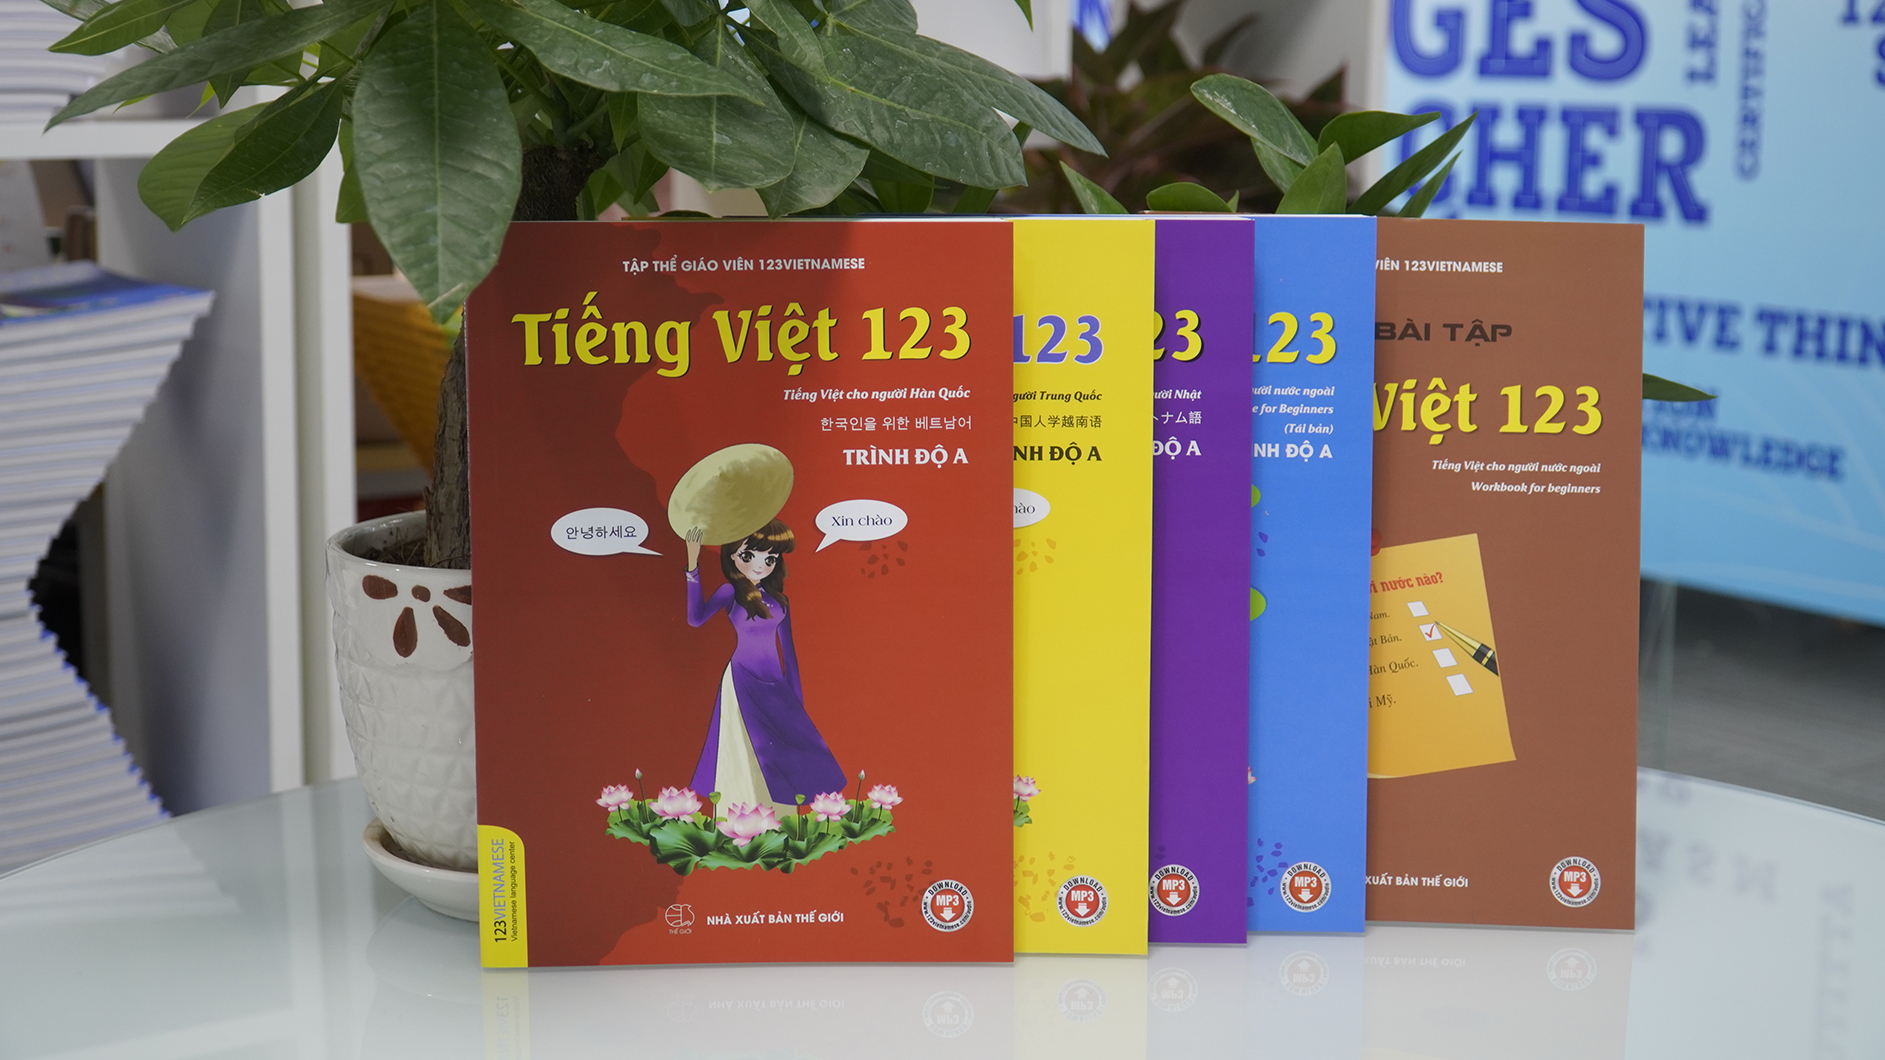 "Tieng Viet 123" Vietnamese book for beginners